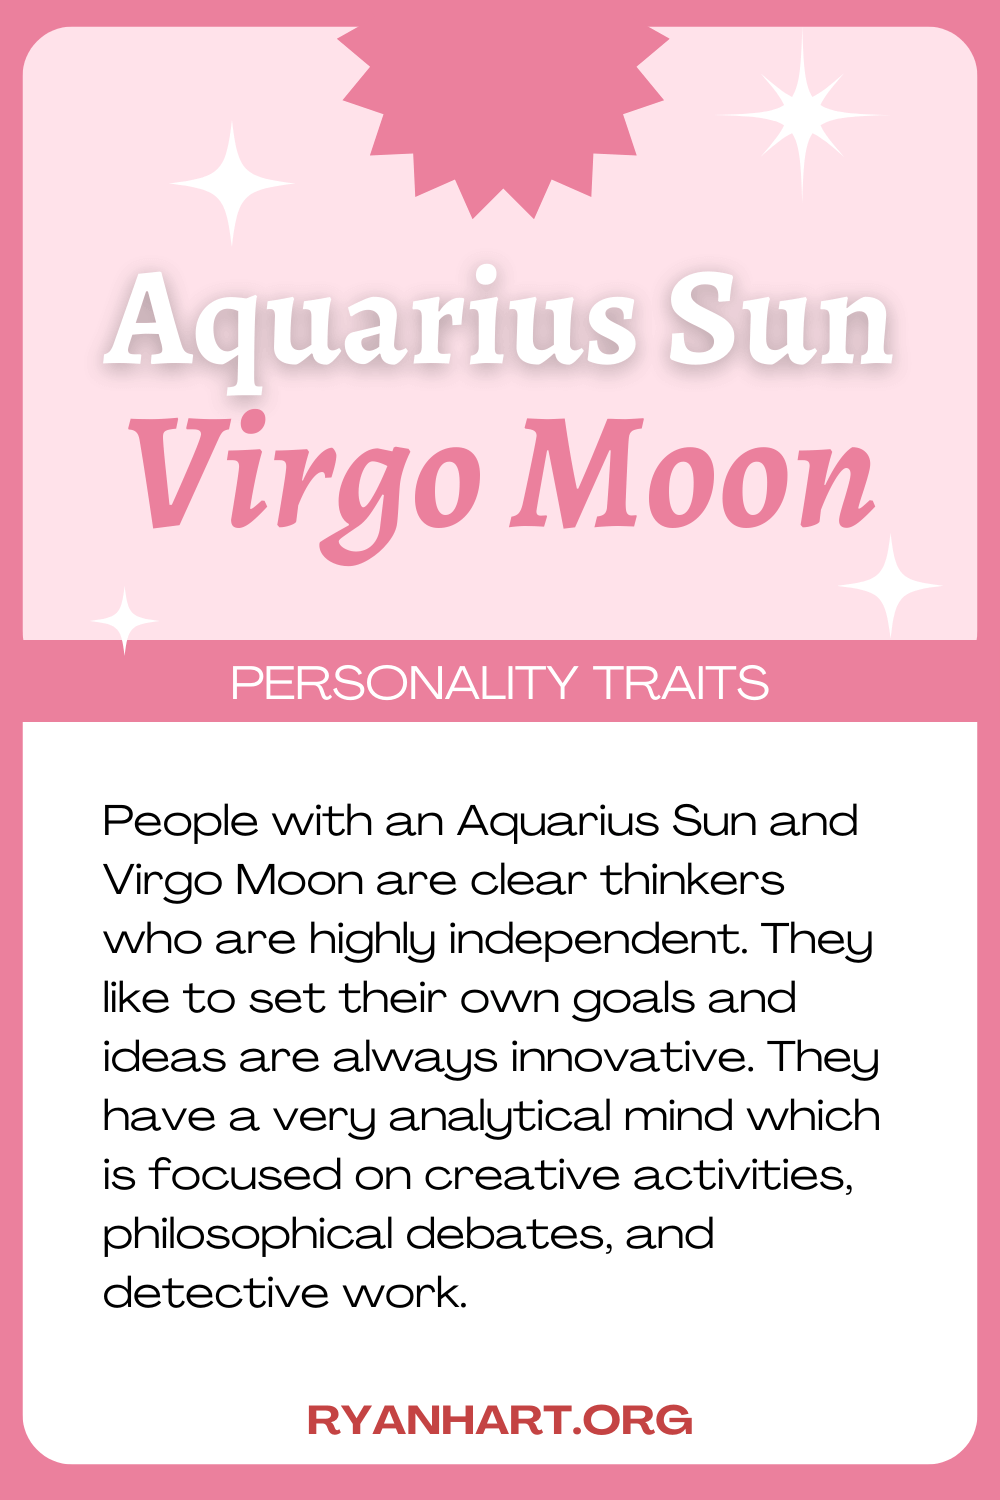 Aquarius Sun Virgo Moon Description